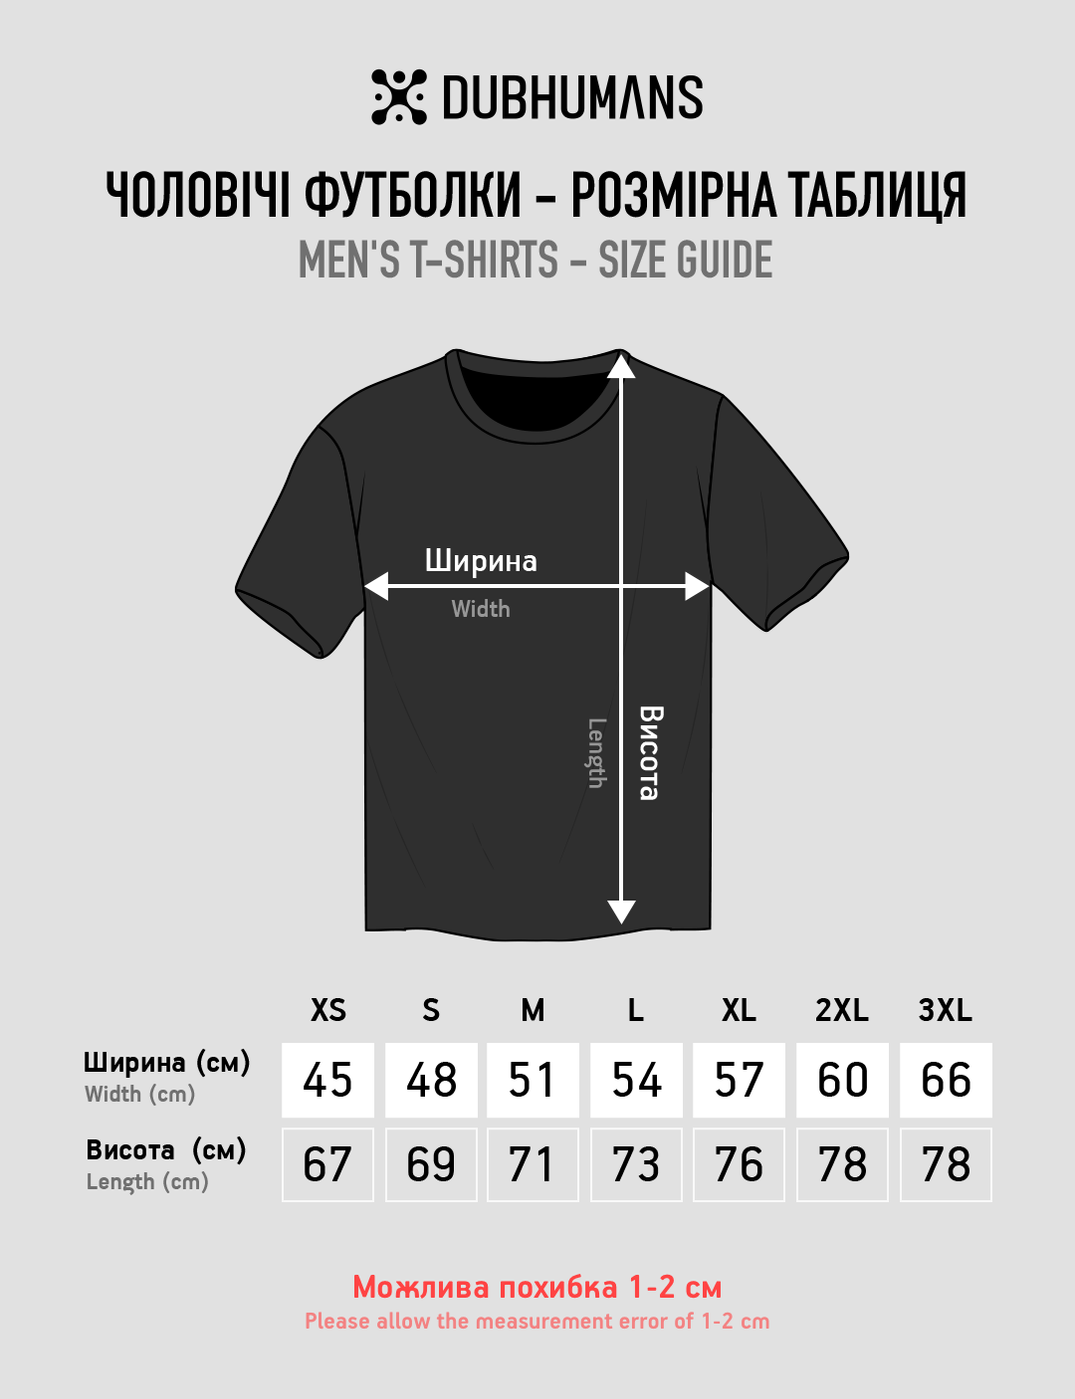 Men's T-shirt "Vinylbolus", Black, M